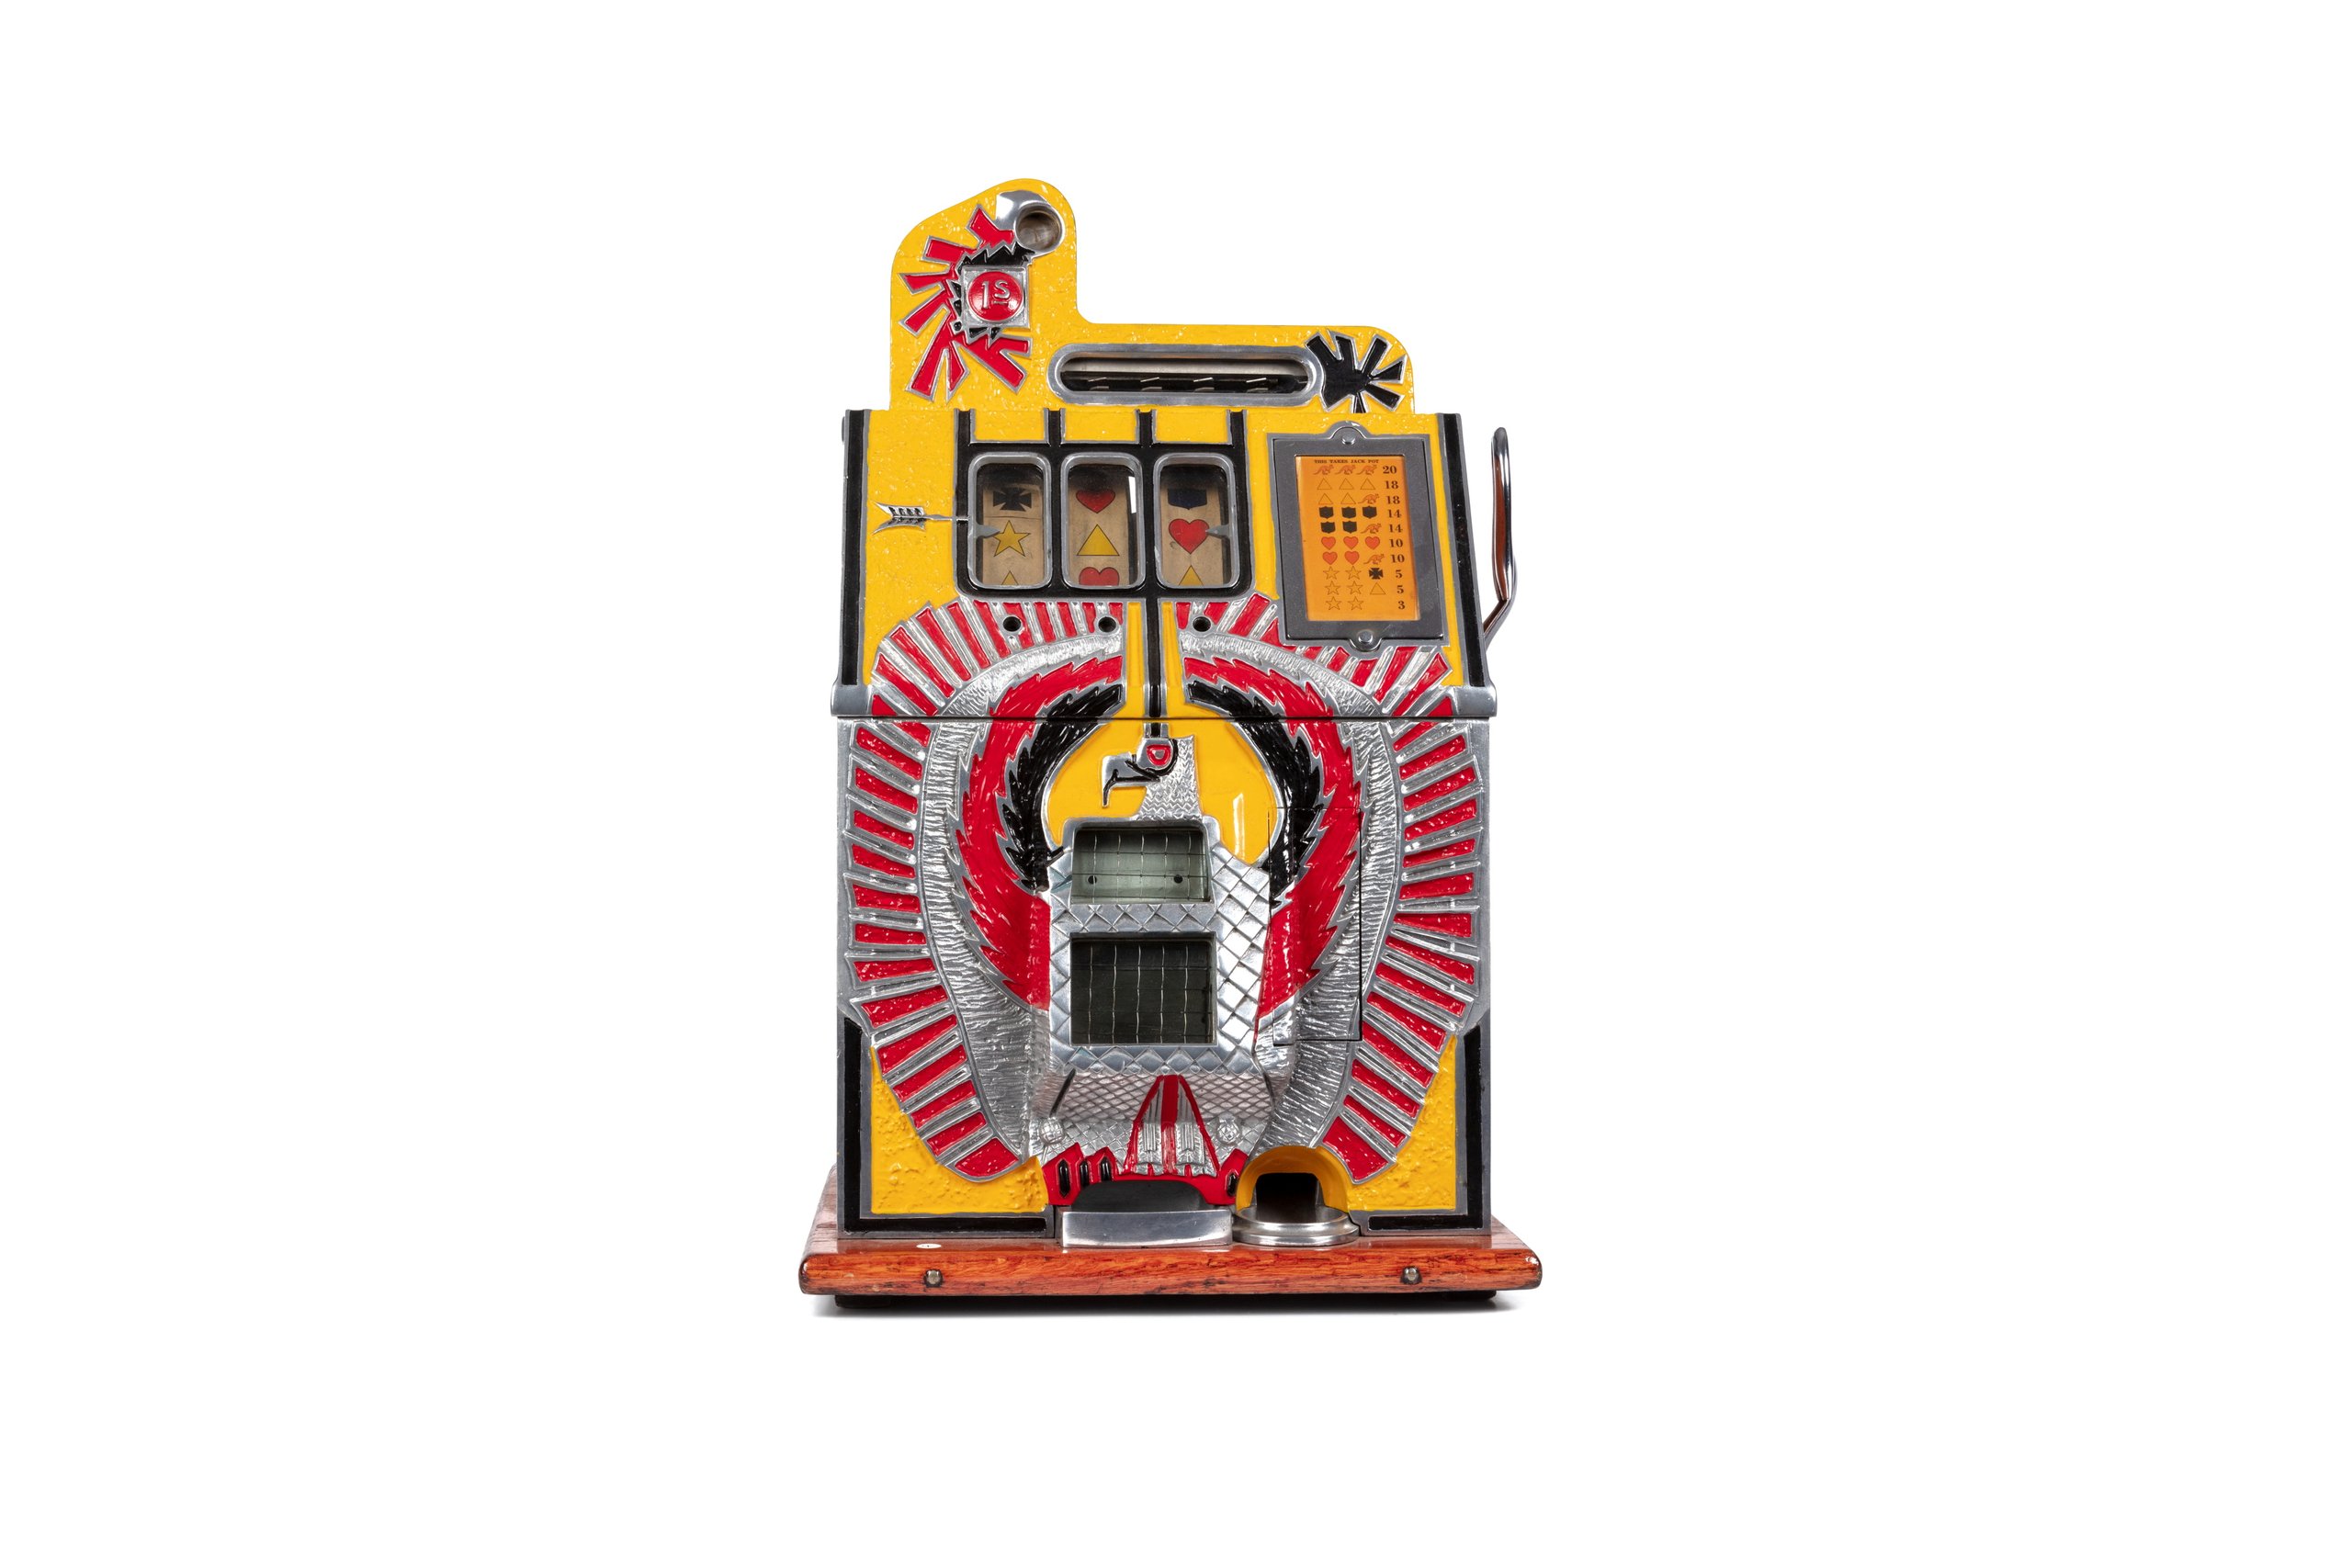 Mills 'War Eagle' poker machine